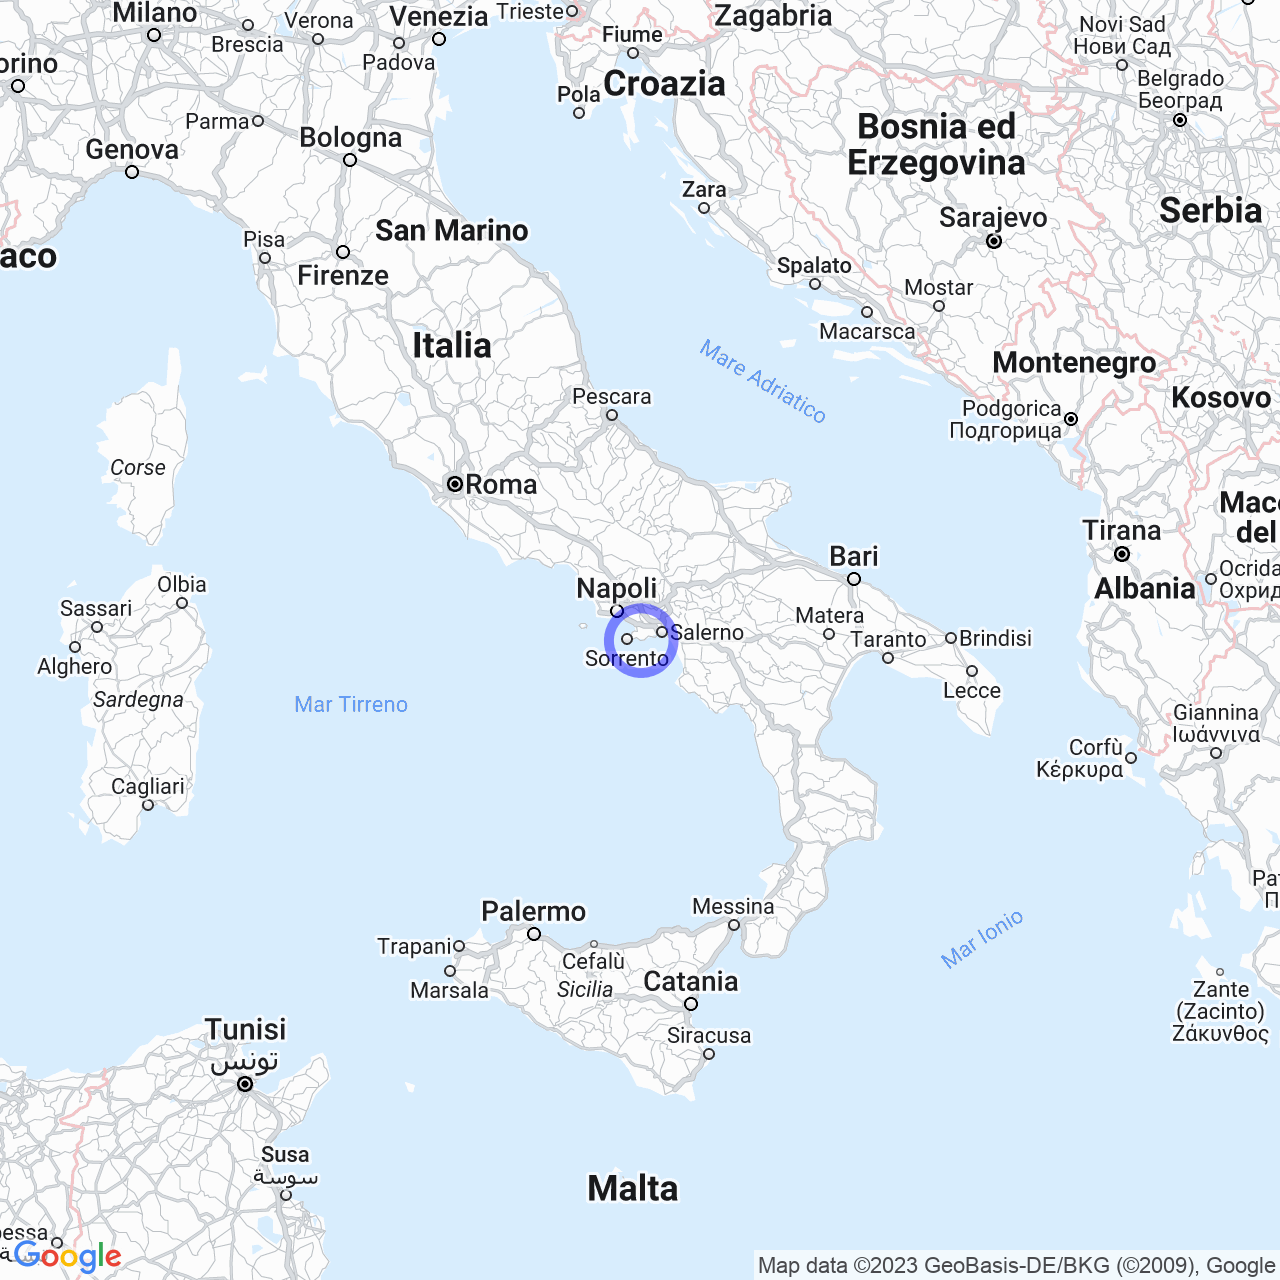 Praiano: pearl of the Amalfi Coast